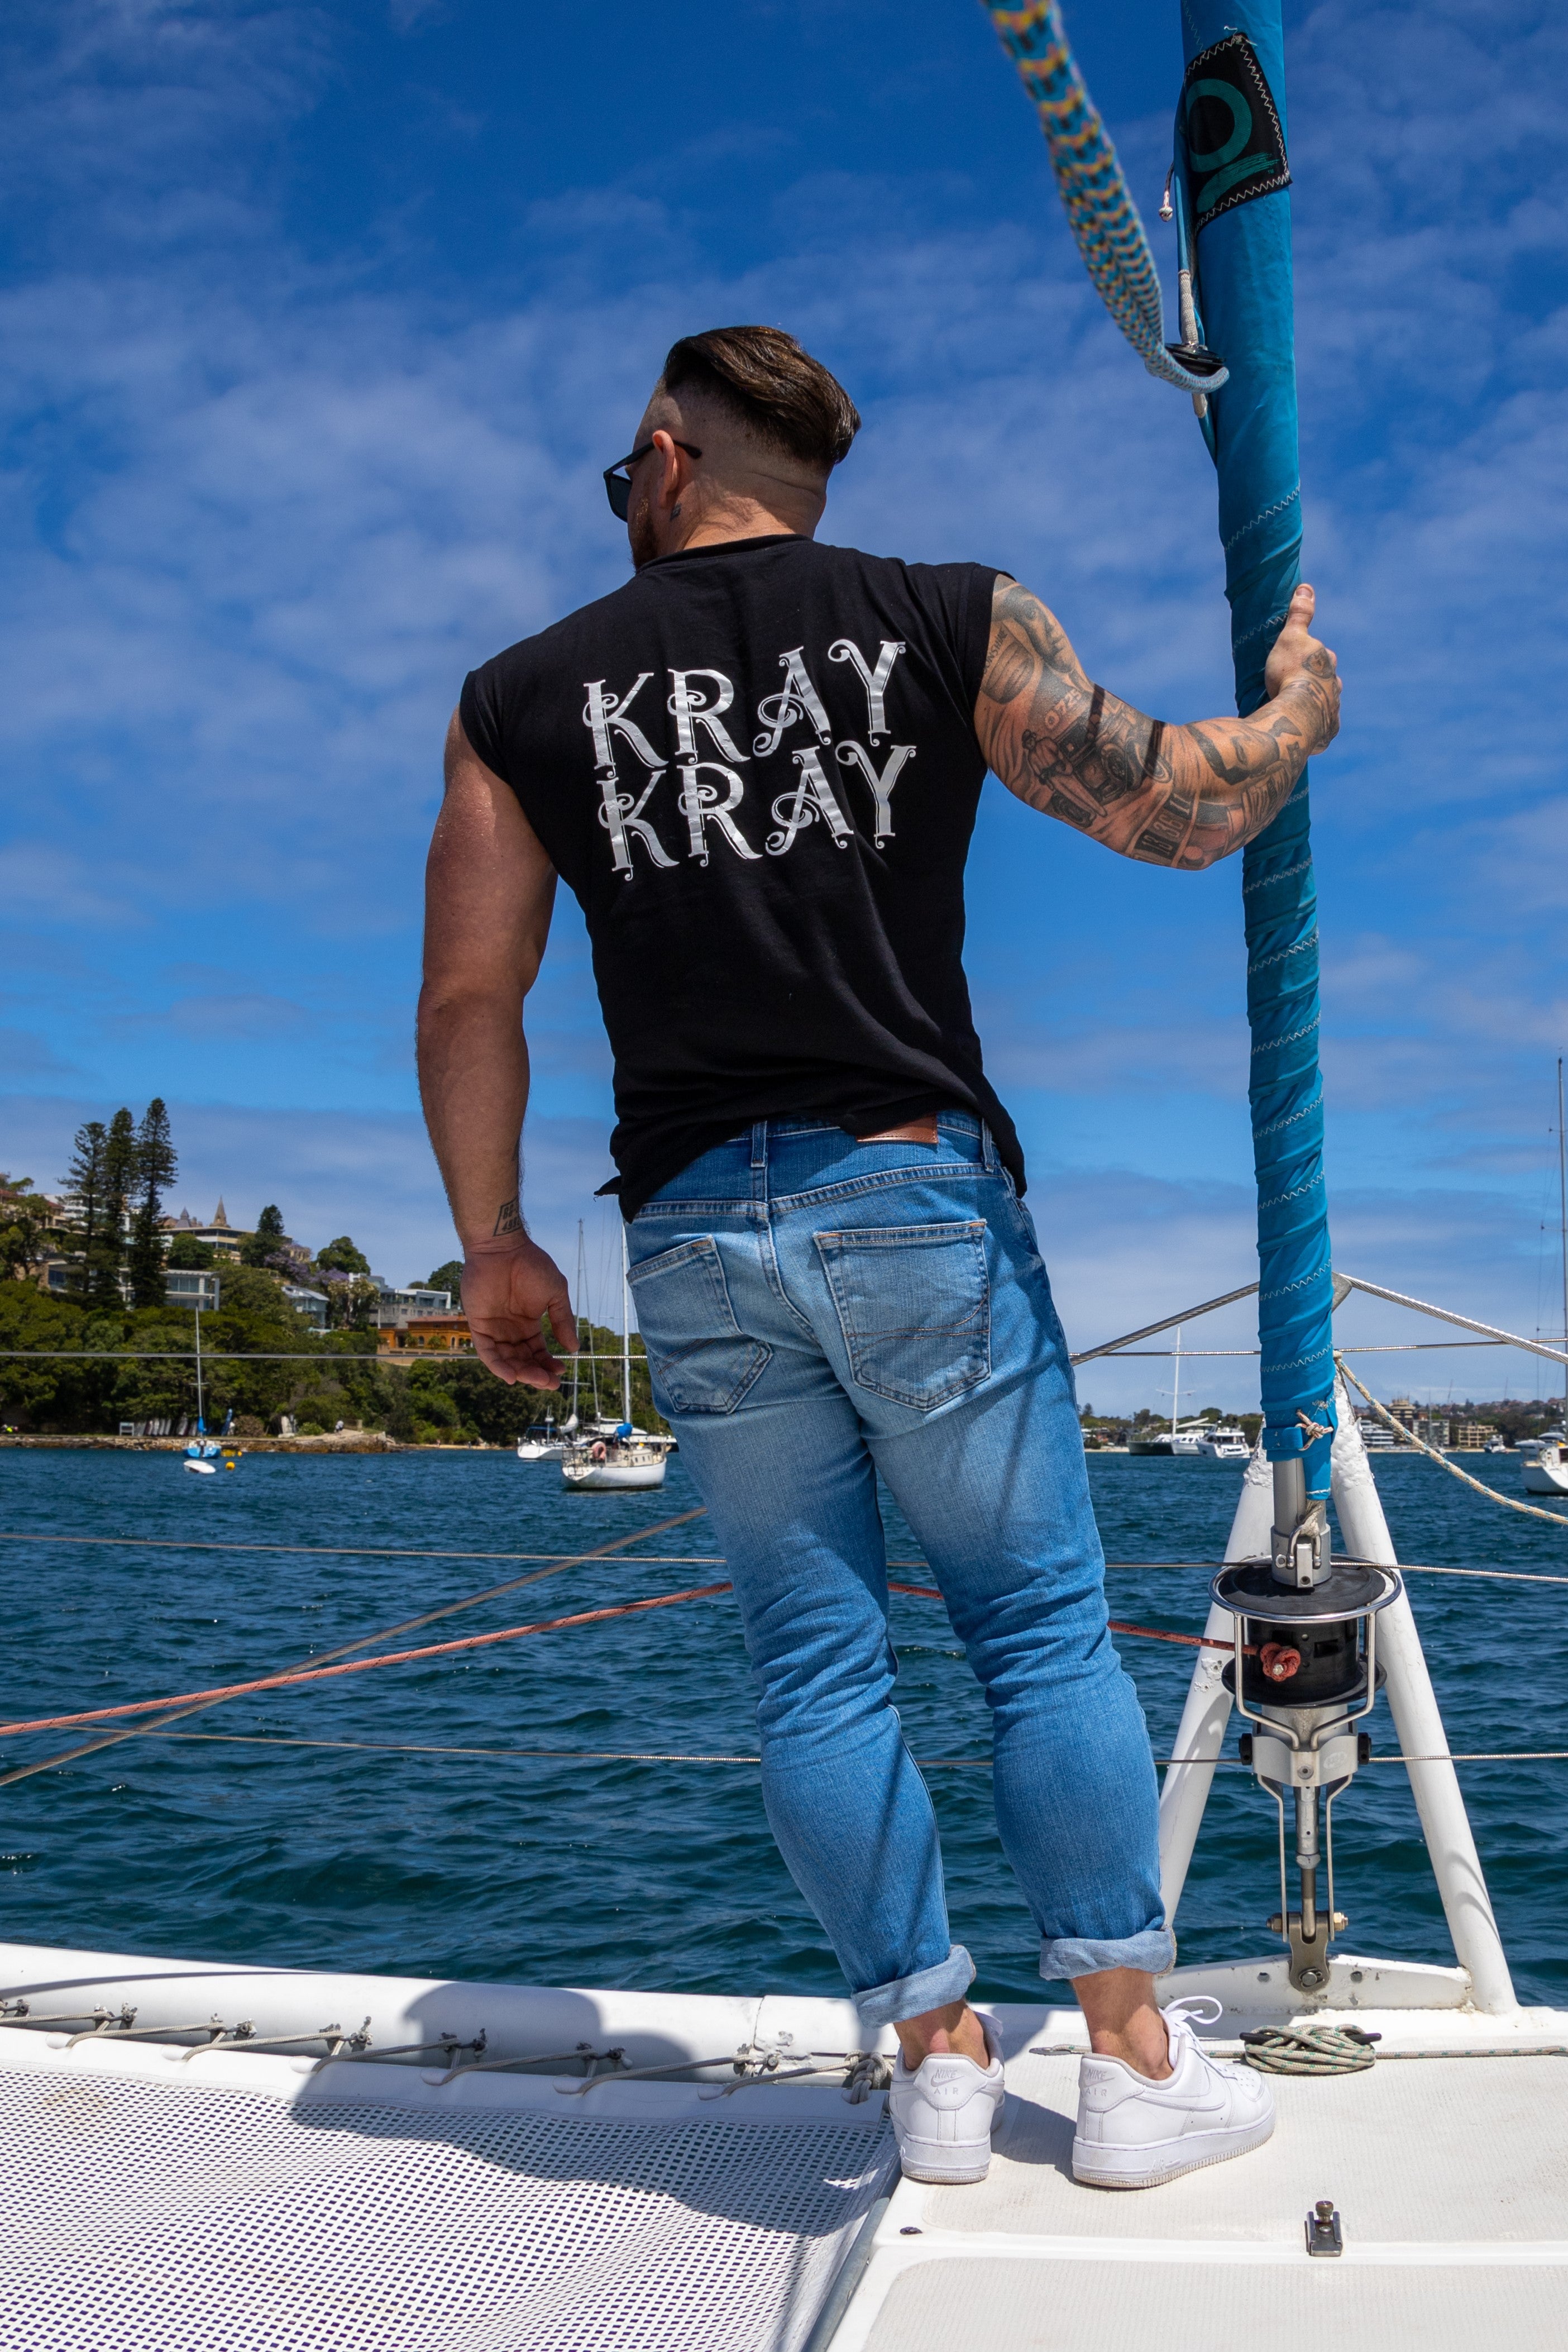 Legacy Series Kray Kray Sleeveless Shirt